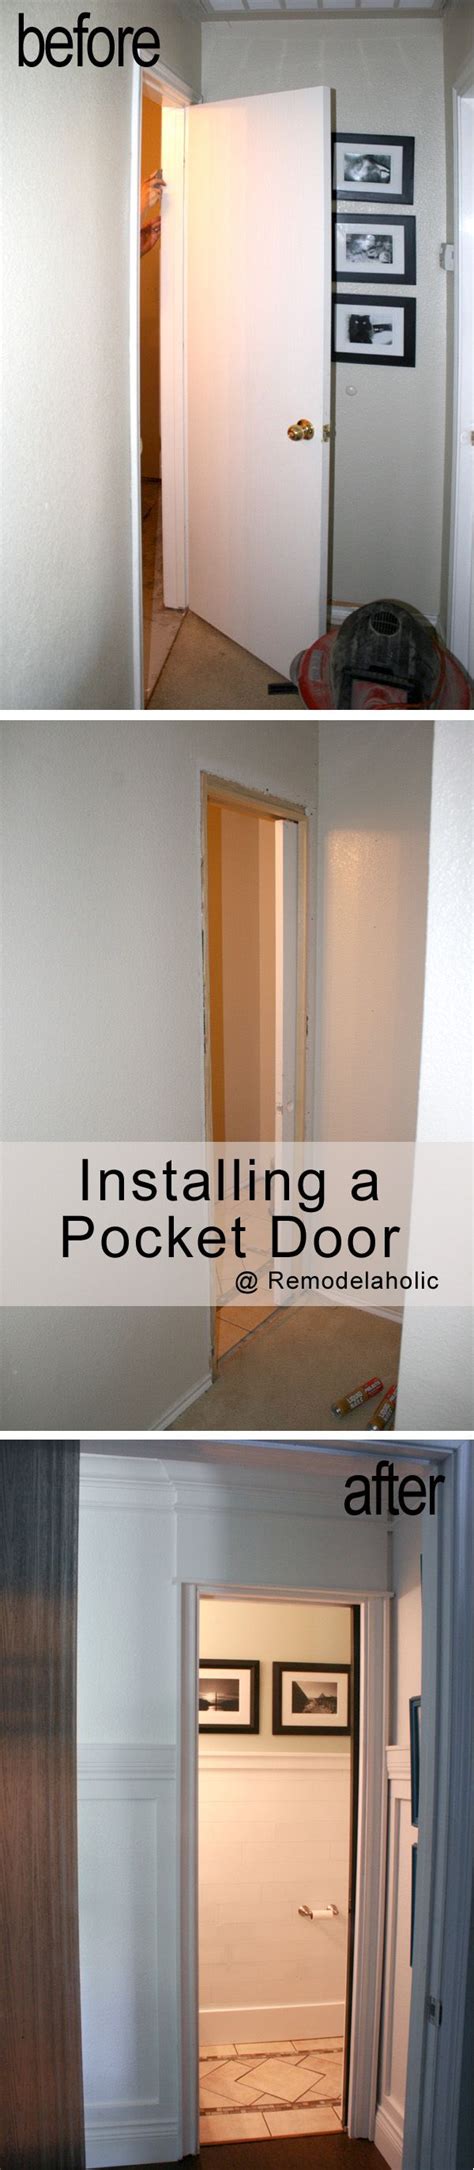 Installing A Pocket Door How To Install A Pocket Door Home Renovation